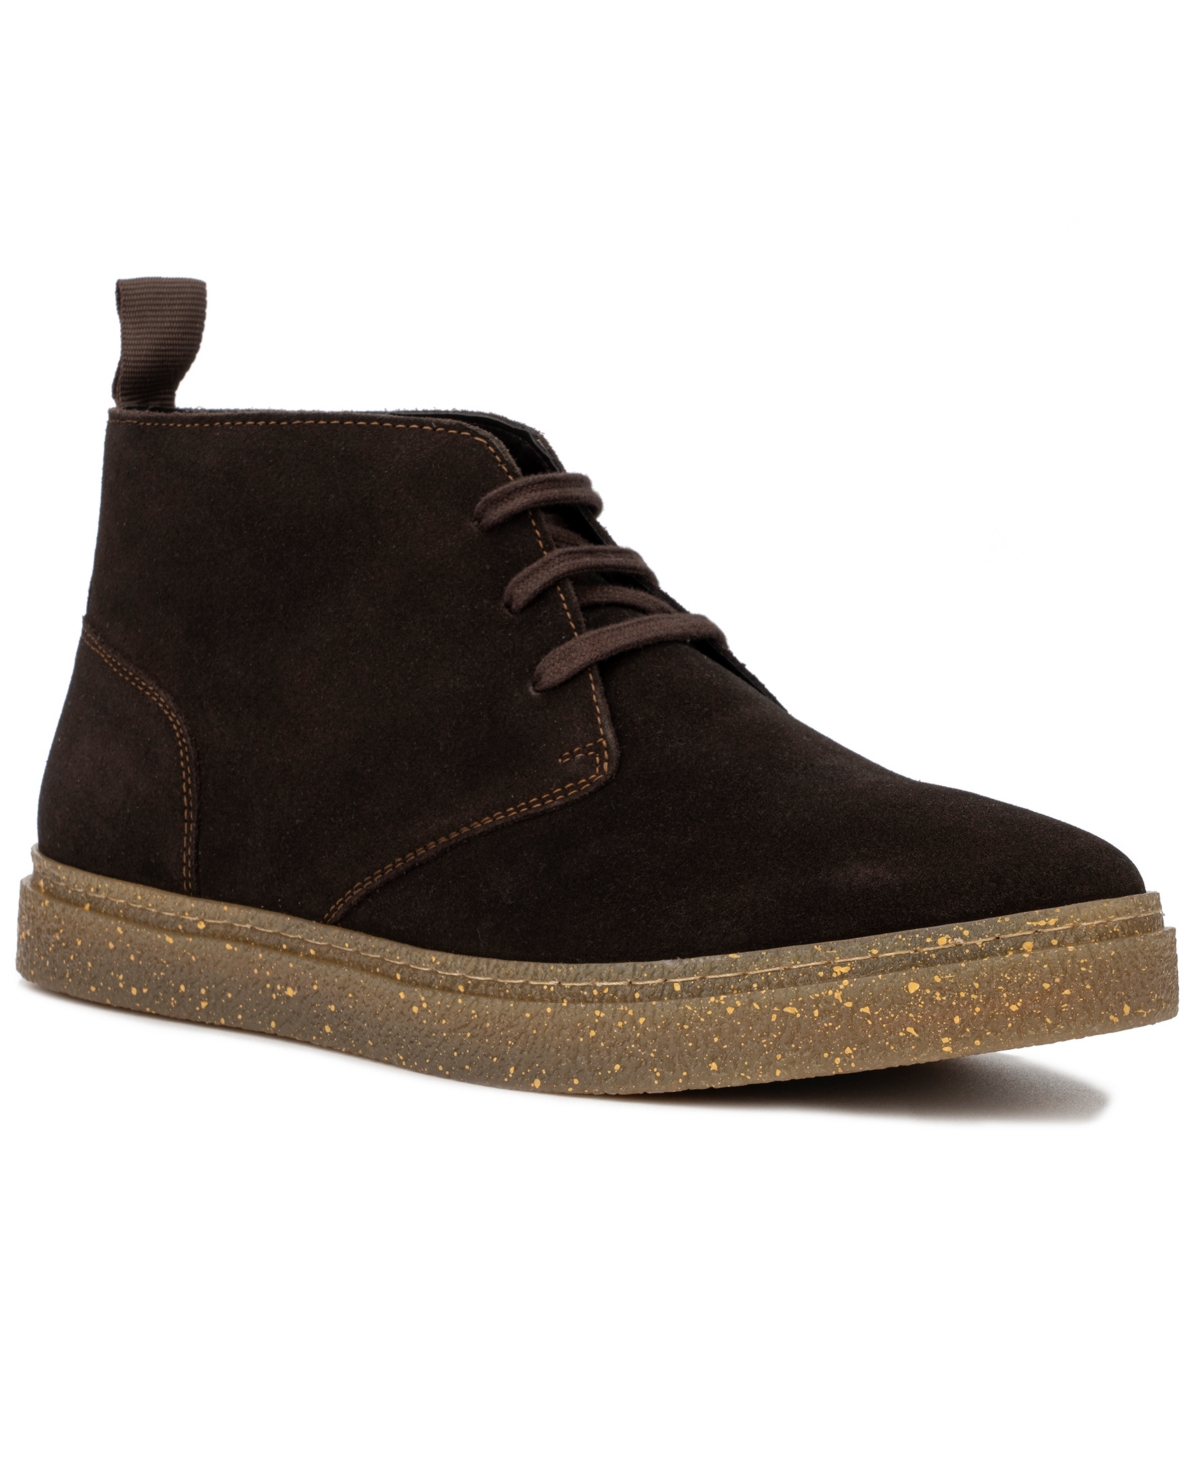 Men's Palmetto Leather Chukka Boots - Brown